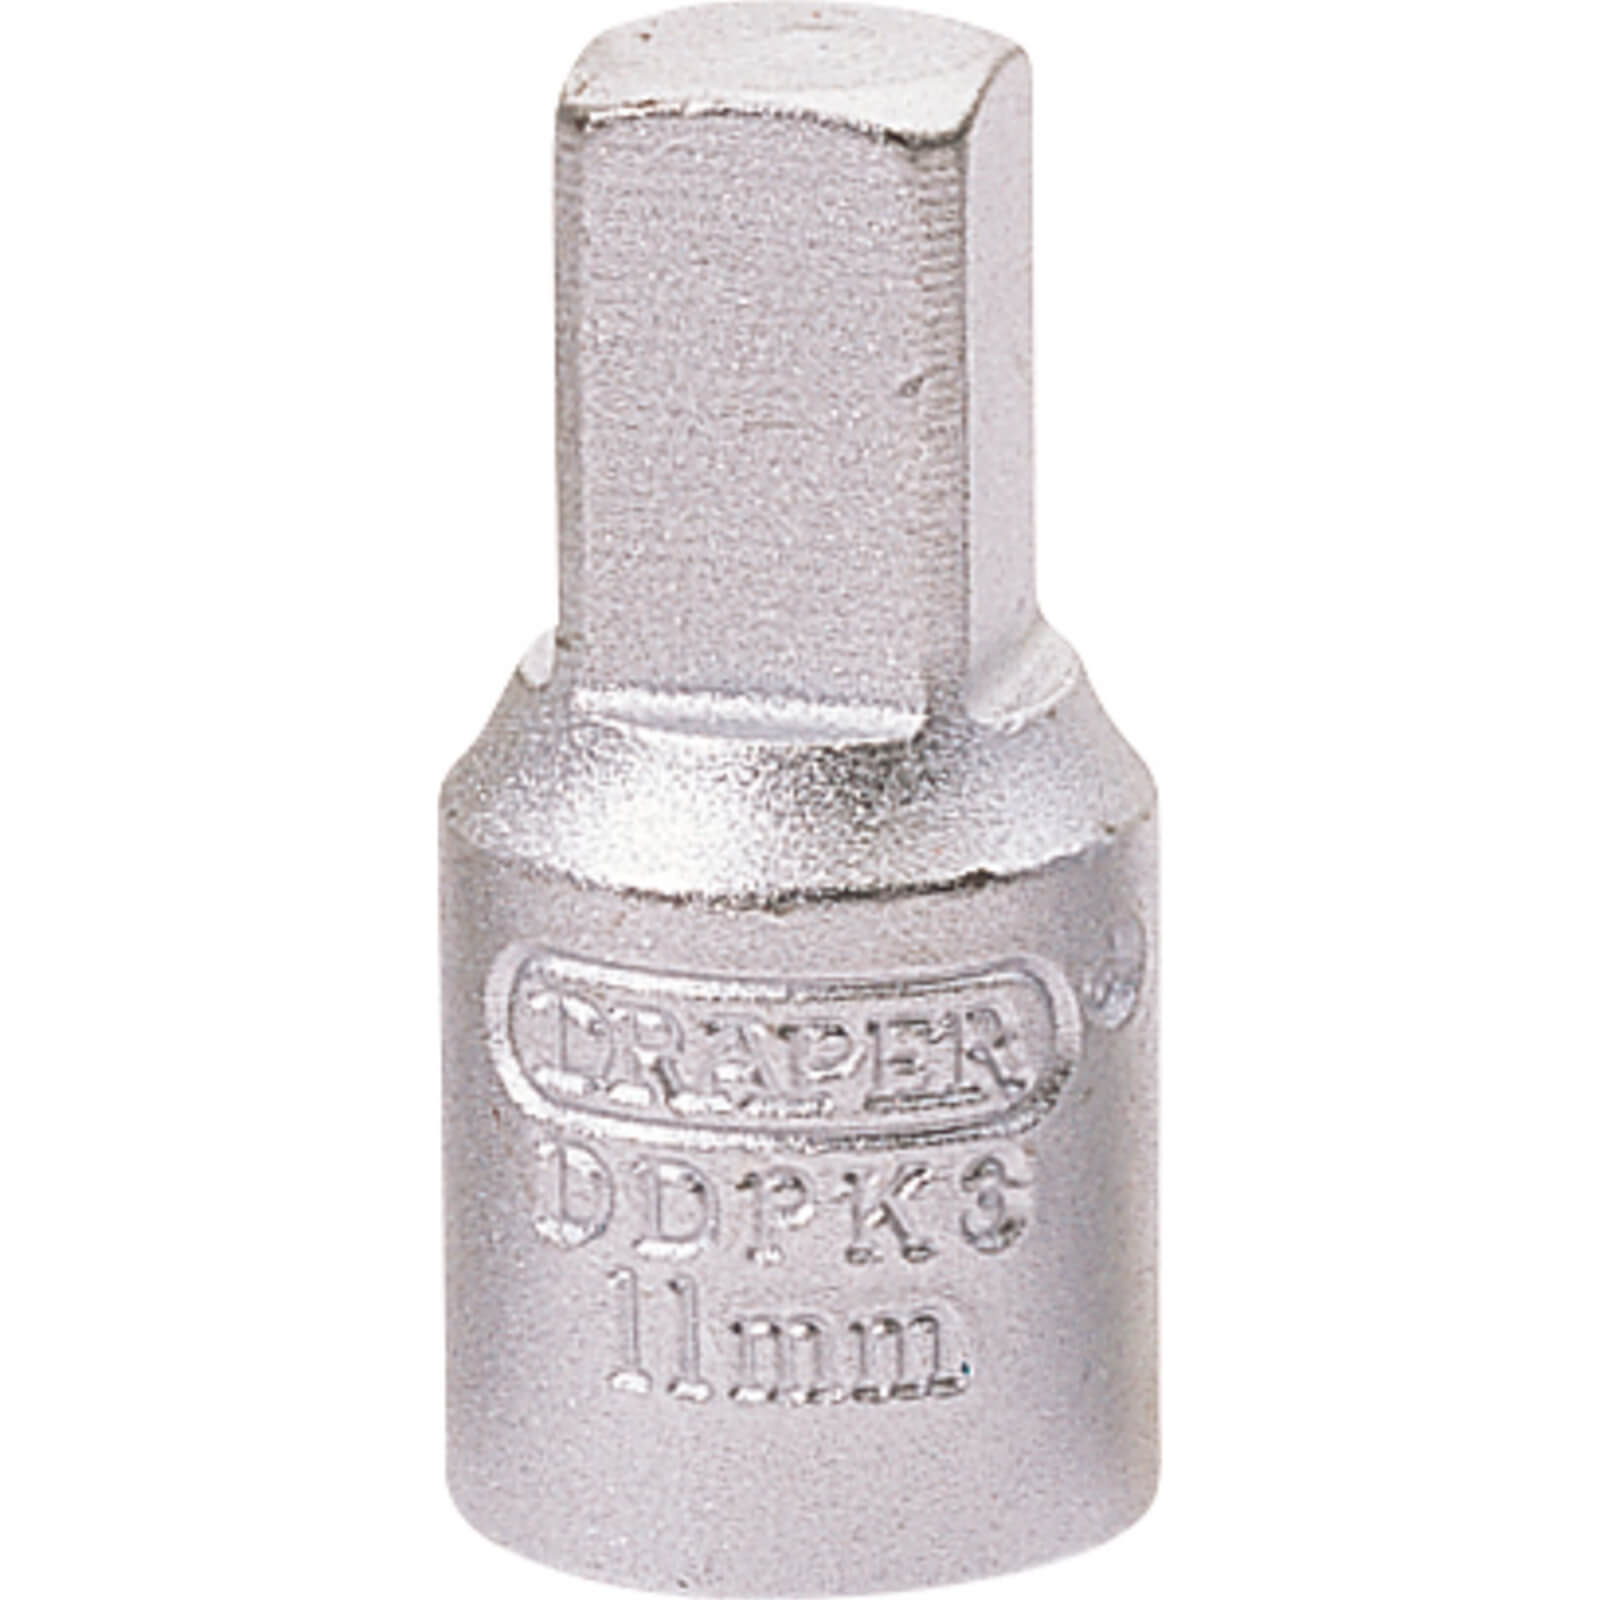 Image of Draper Metric Drain Plug Key 3/8" 11mm